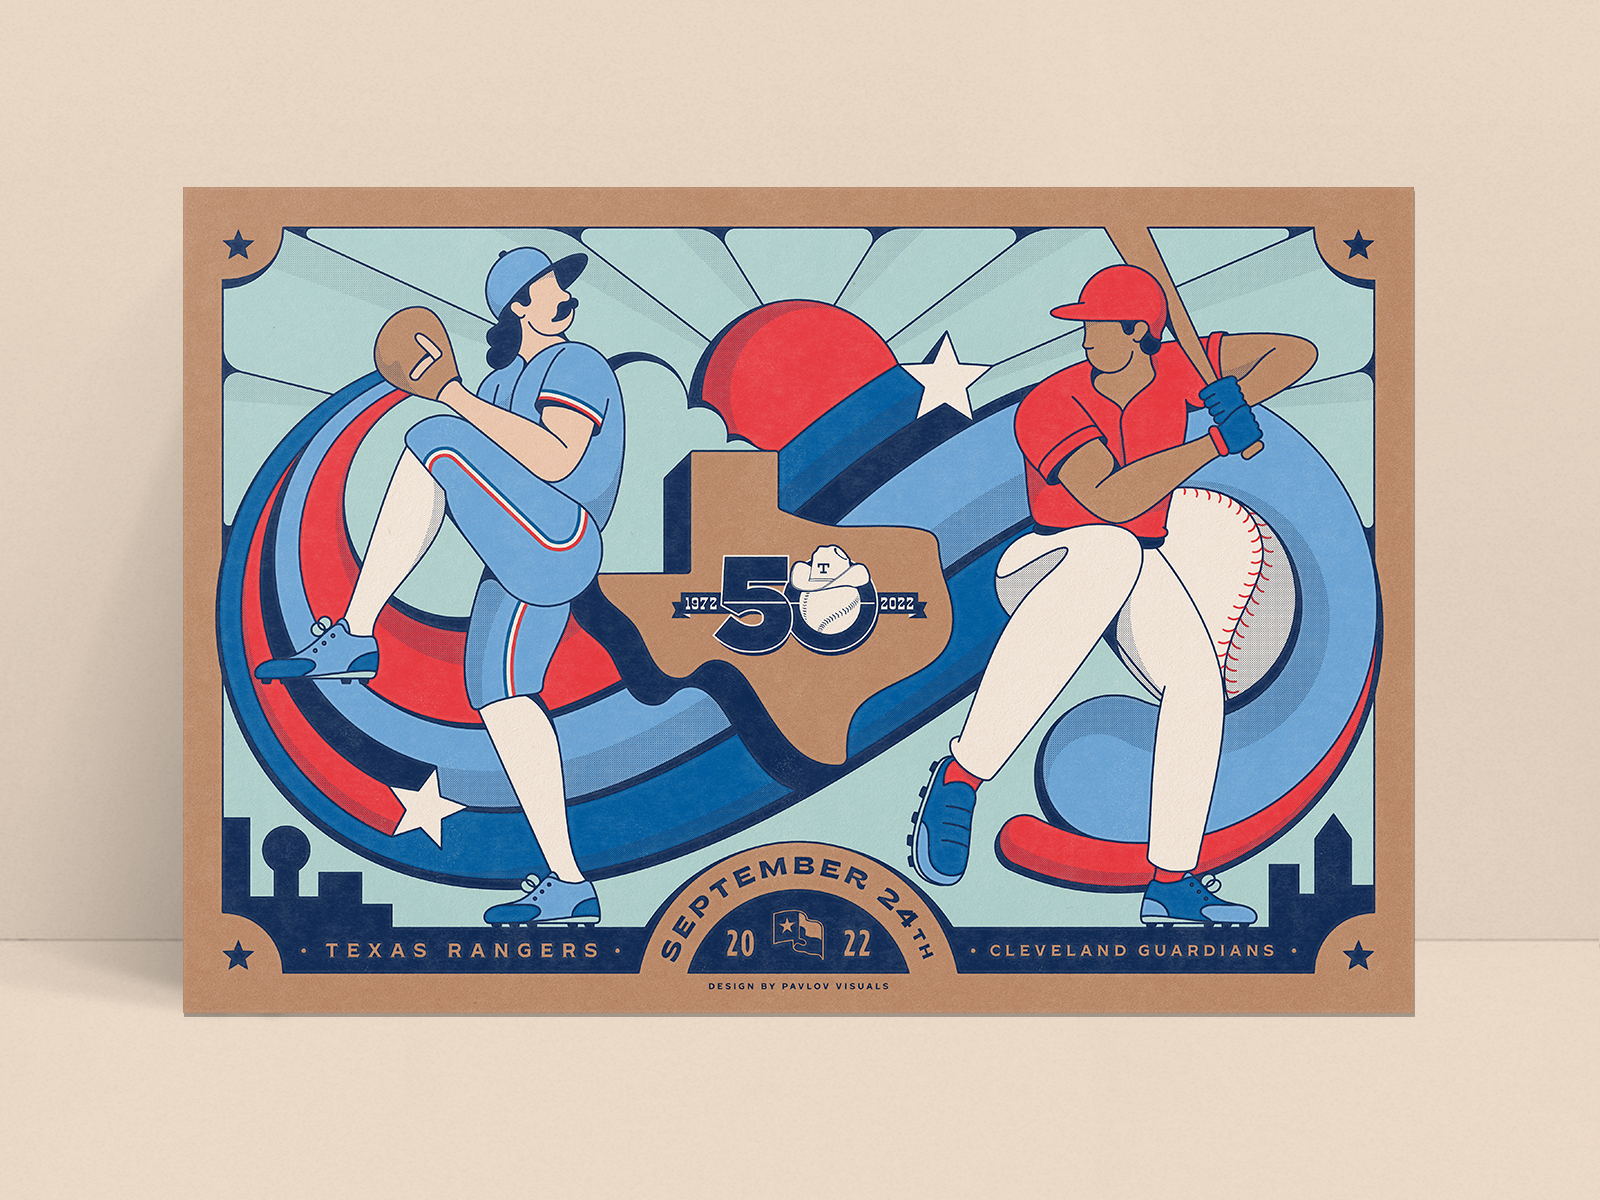 Texas Rangers 50th Anniversary Poster by Pavlov Visuals on Dribbble